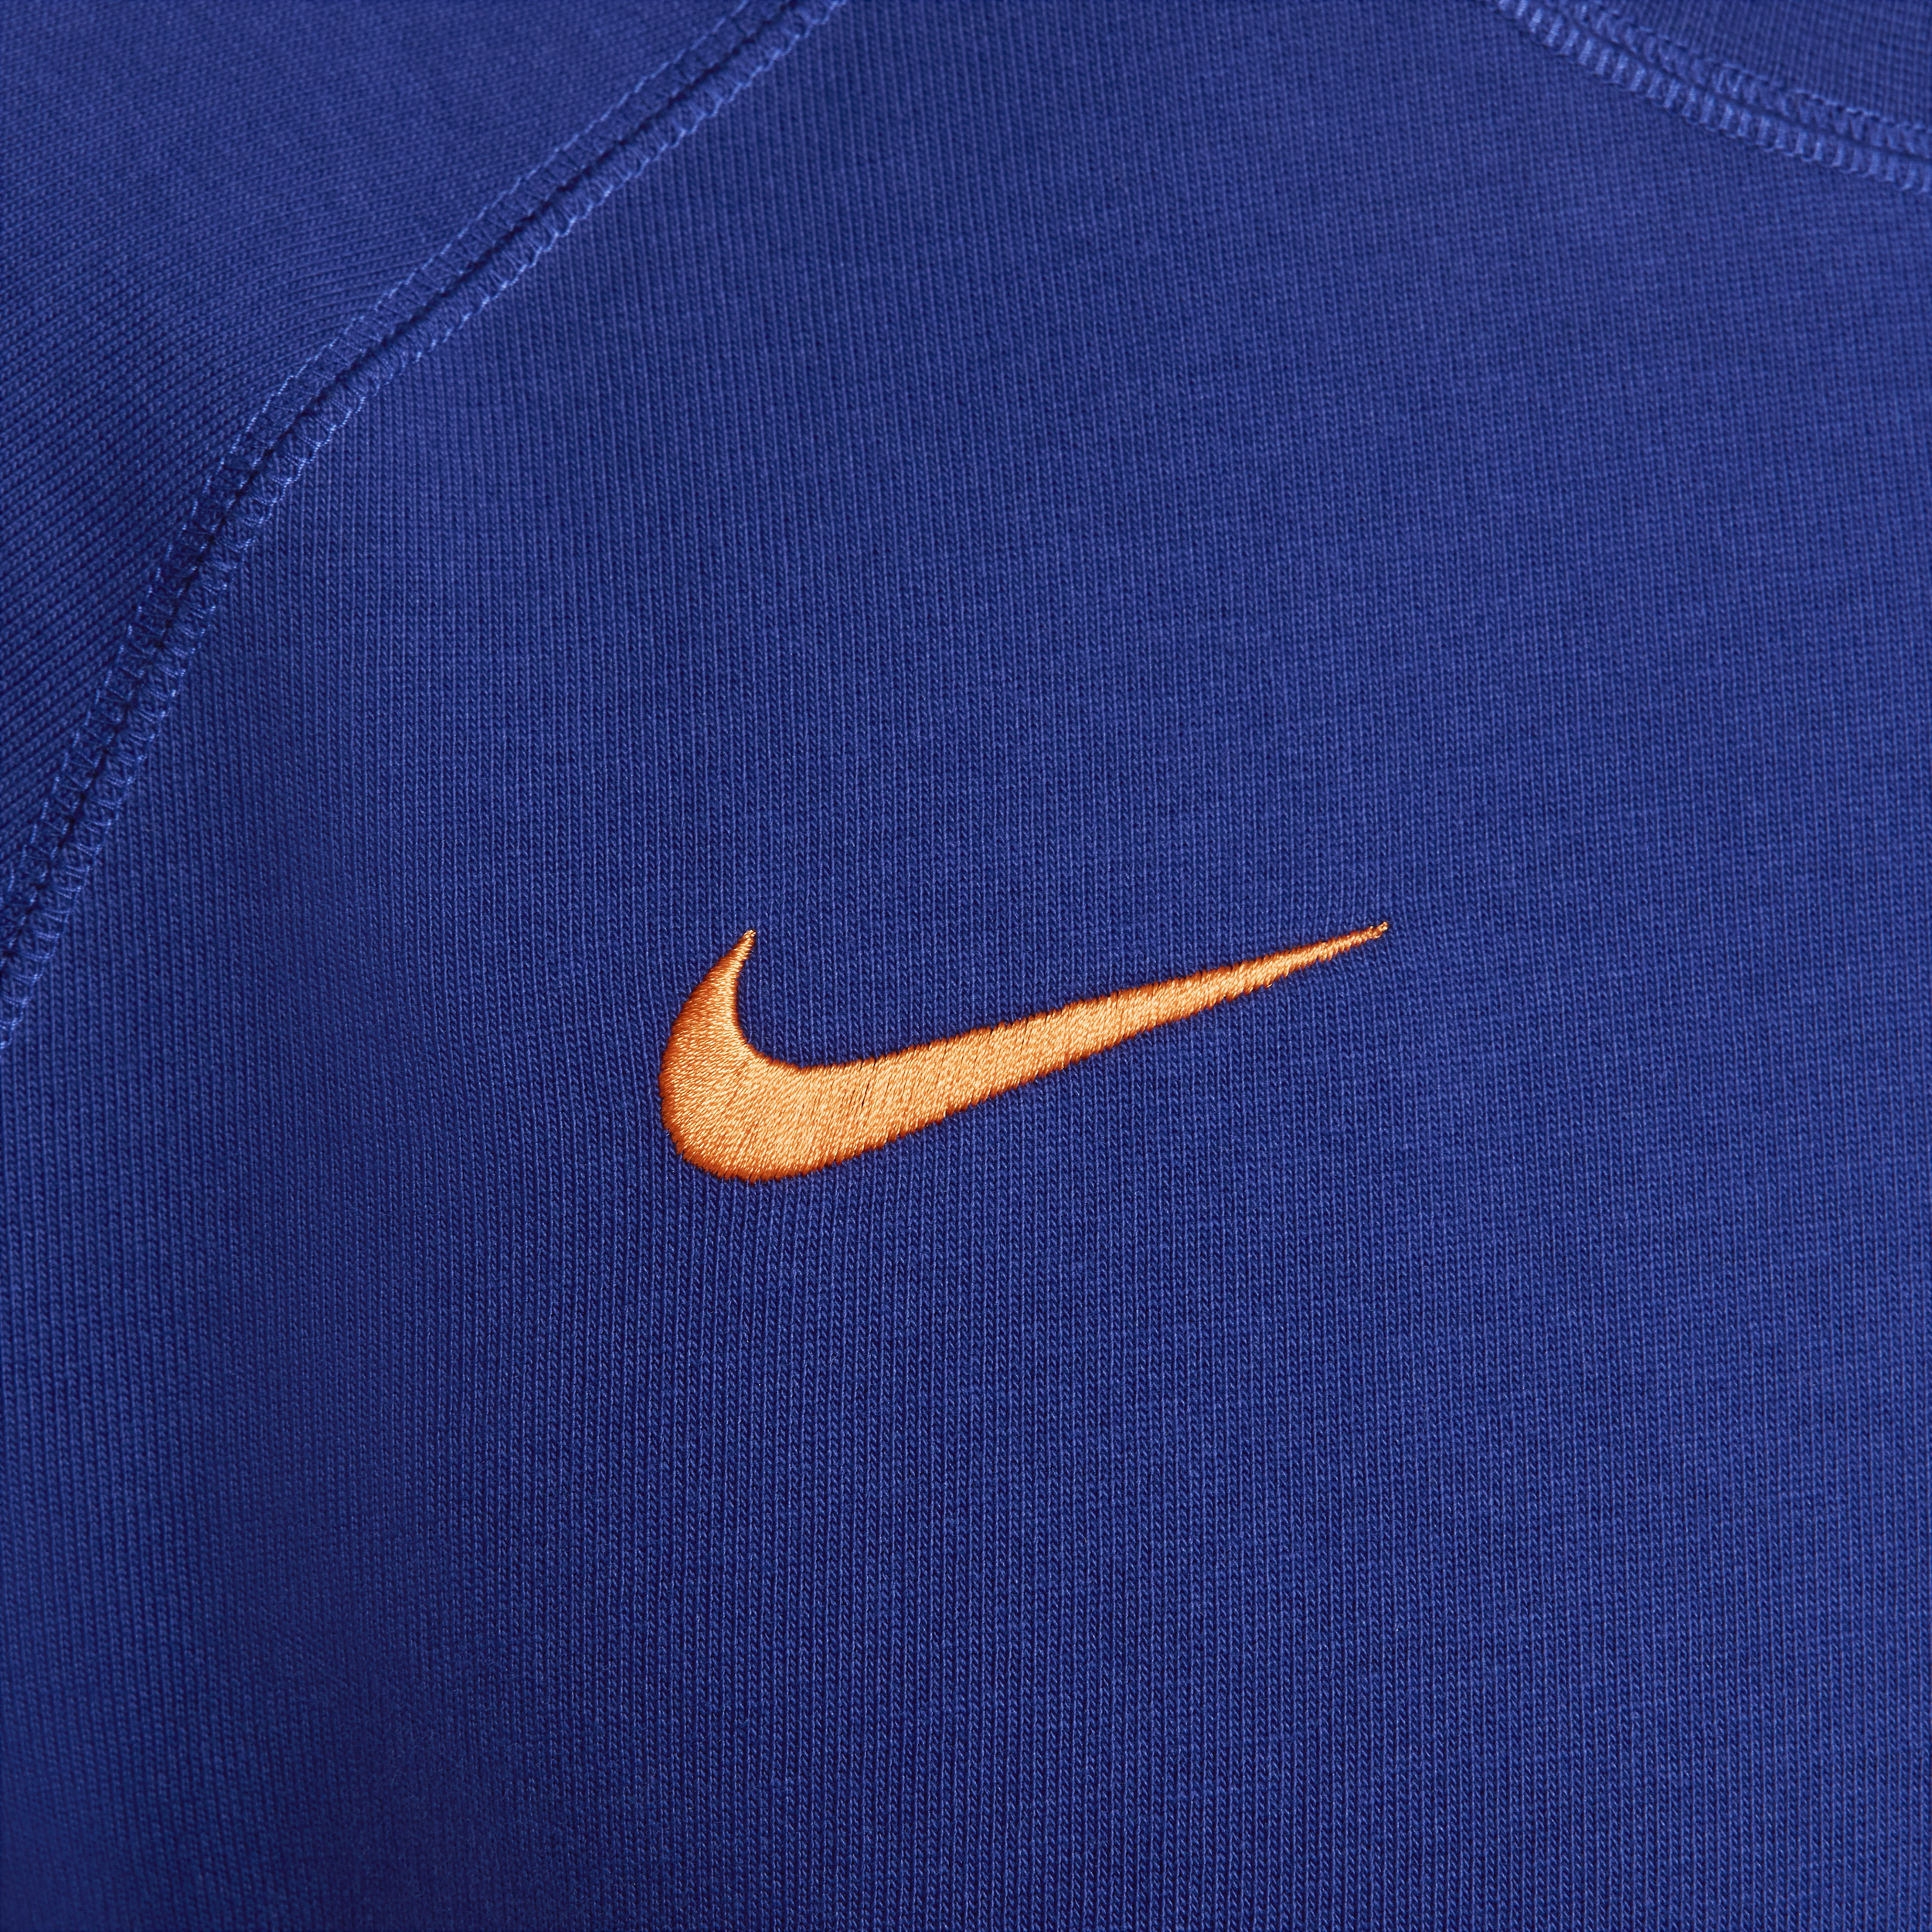 Nike Nederland Travel voetbaltop met korte mouwen Blauw